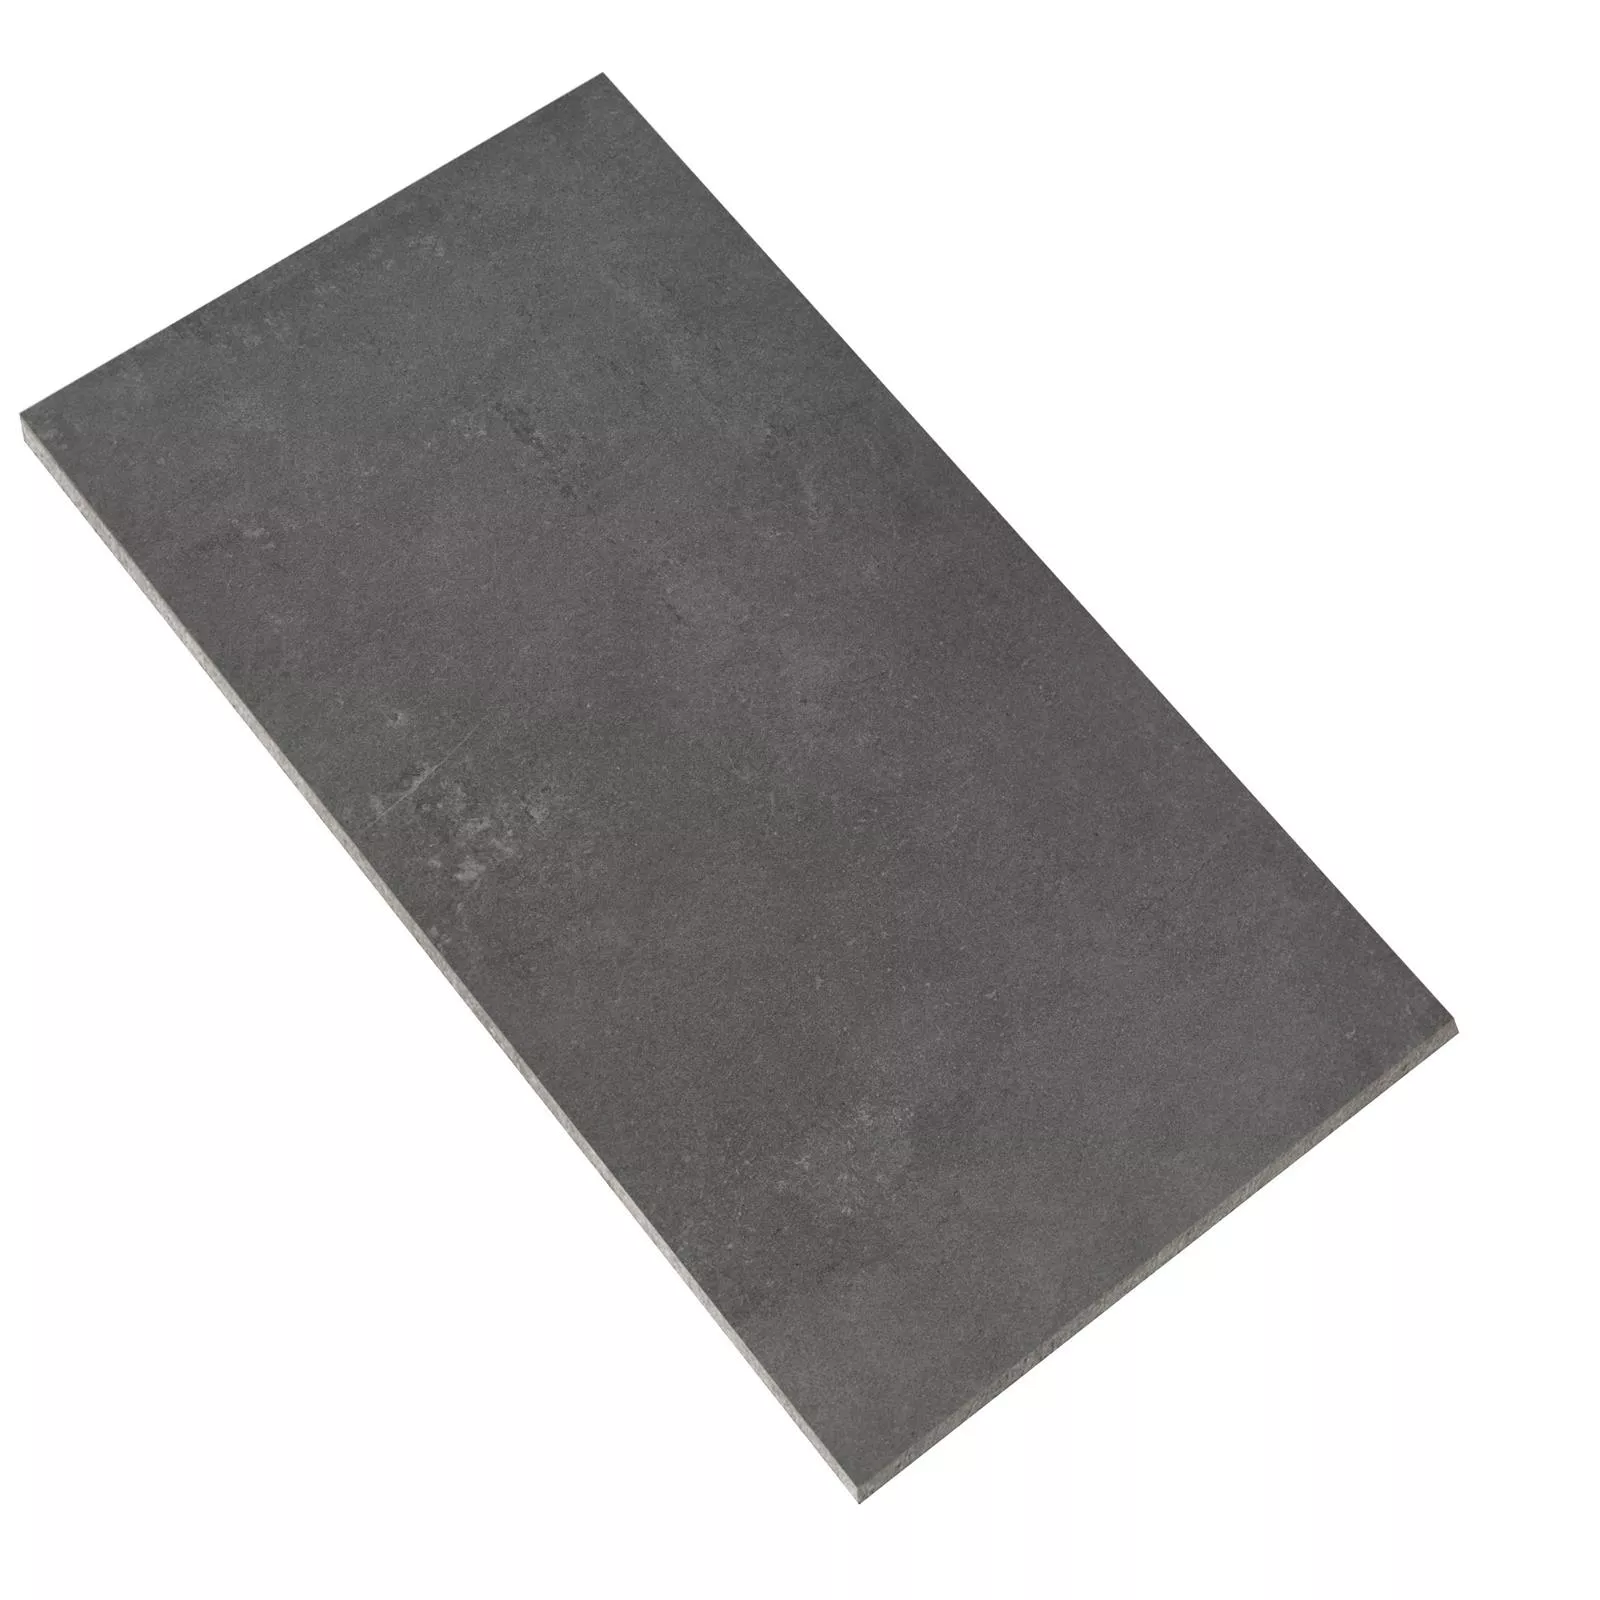 Sample Floor Tiles Cement Optic Nepal Slim Anthracite 30x60cm